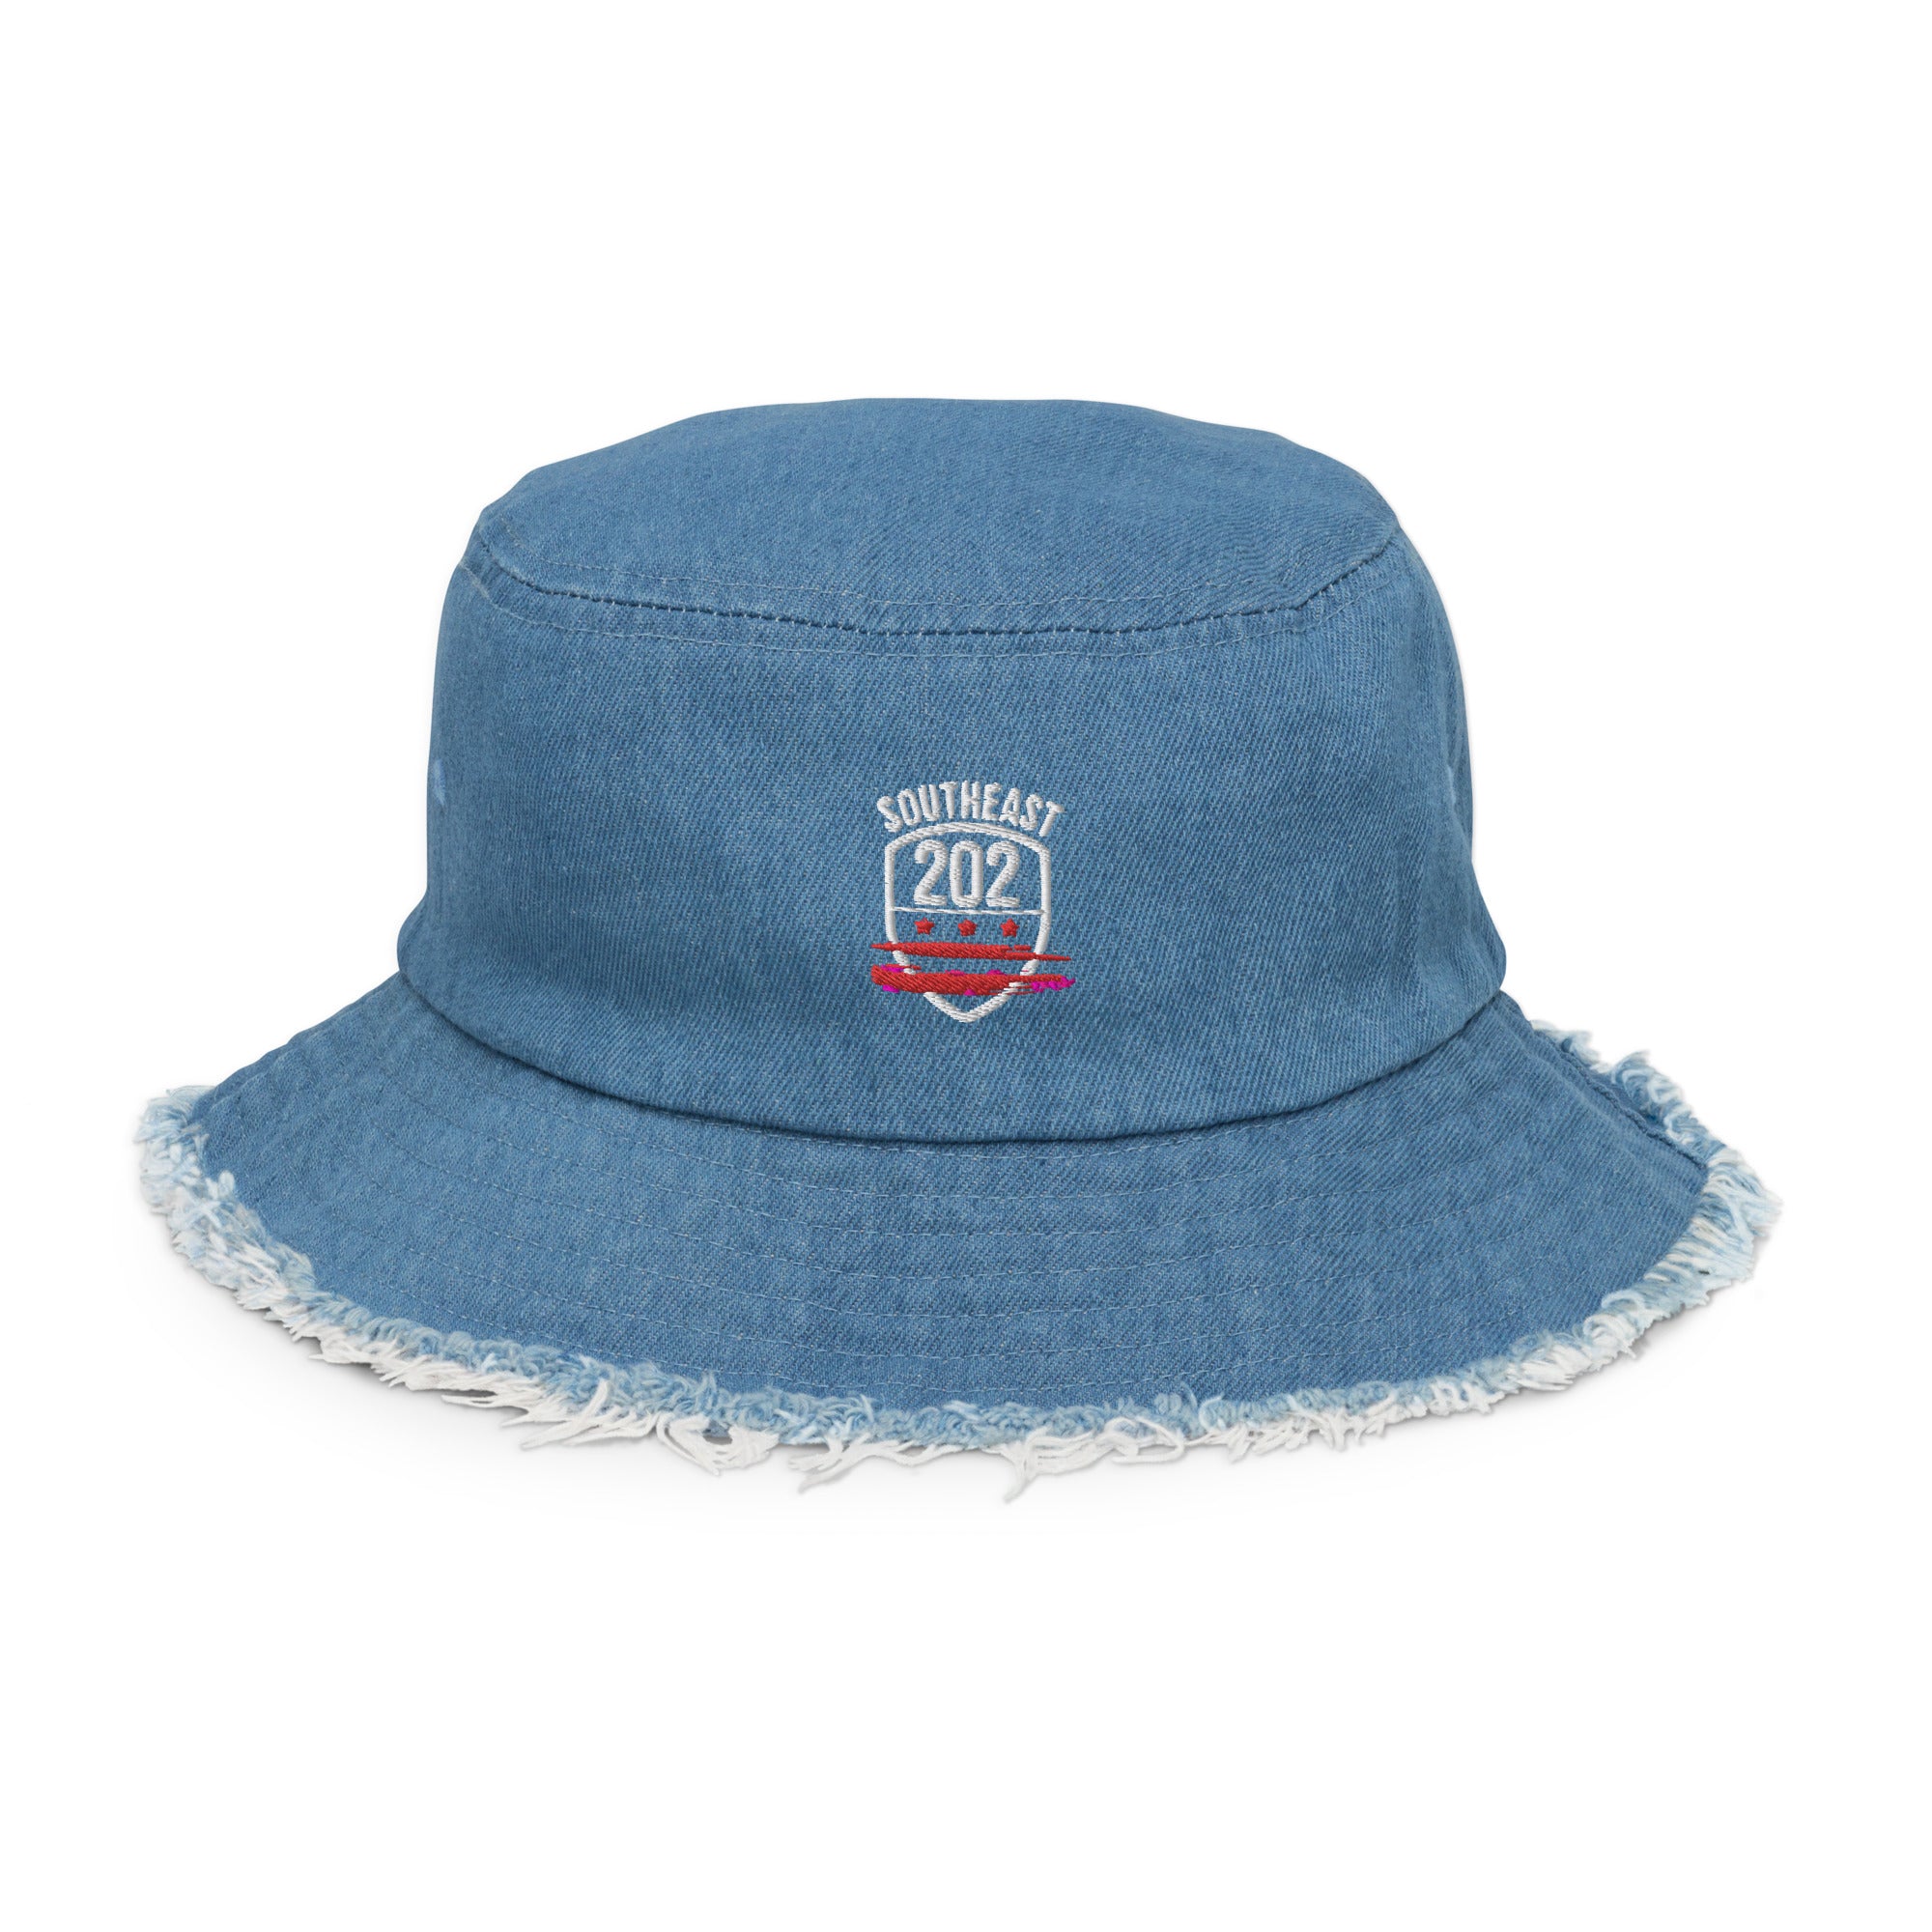 'SOUTHEAST DC/202'-Distressed Denim Bucket Hat